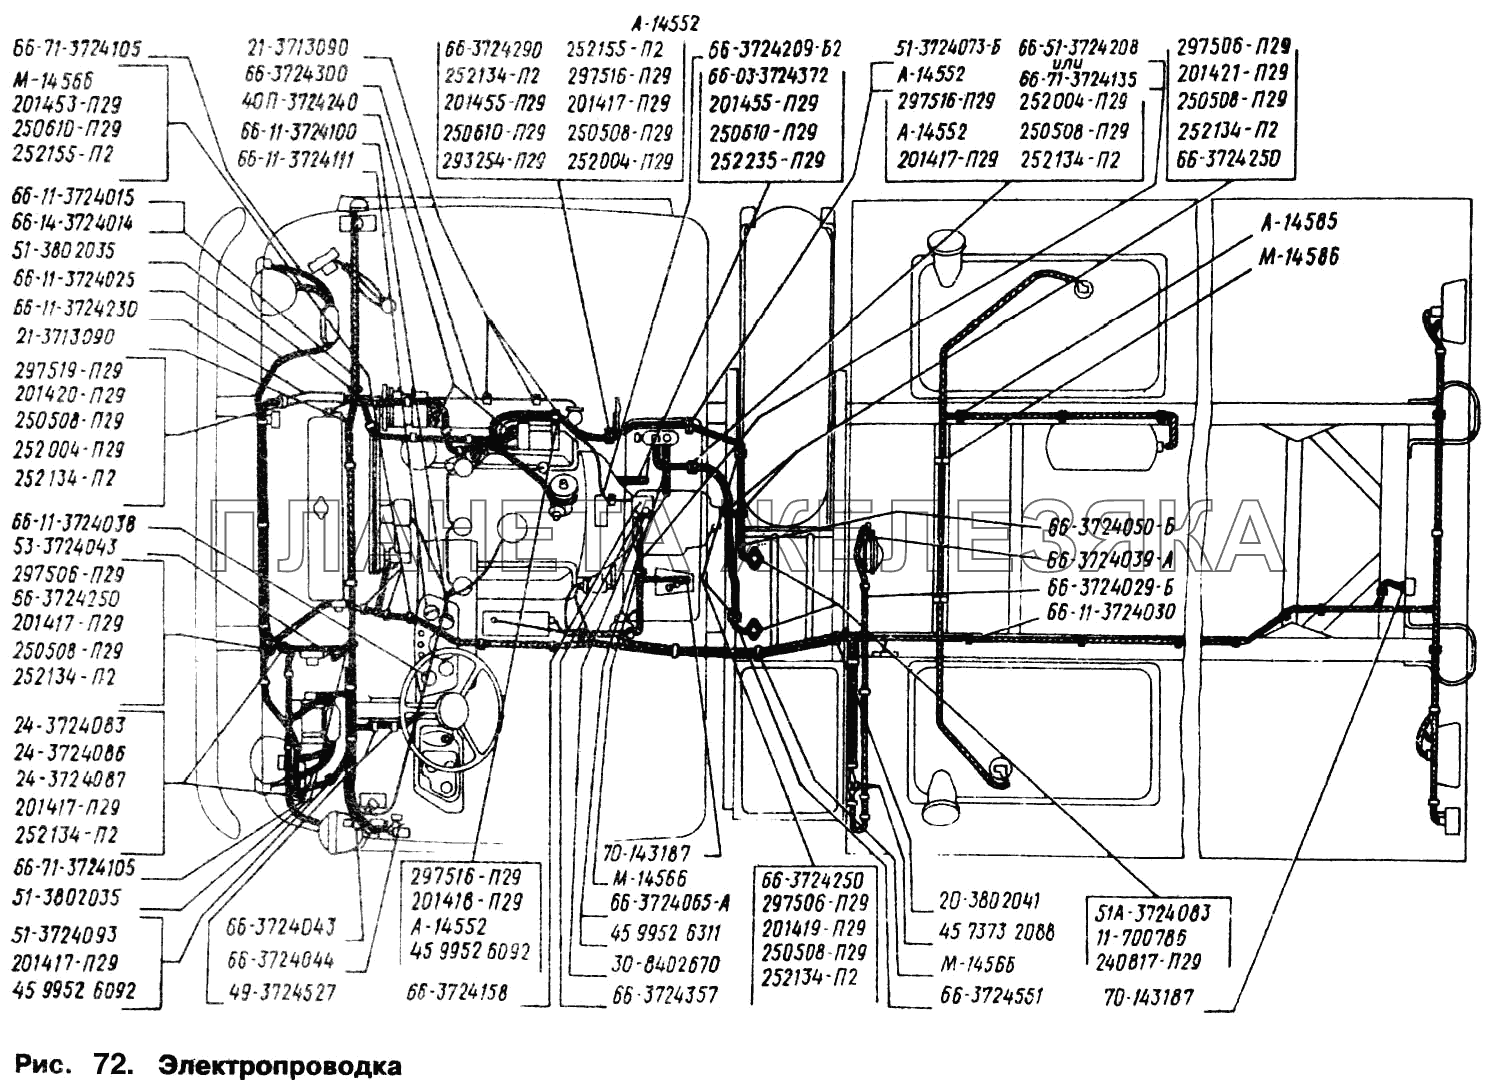 Электропроводка ГАЗ-66 (Каталог 1996 г.)